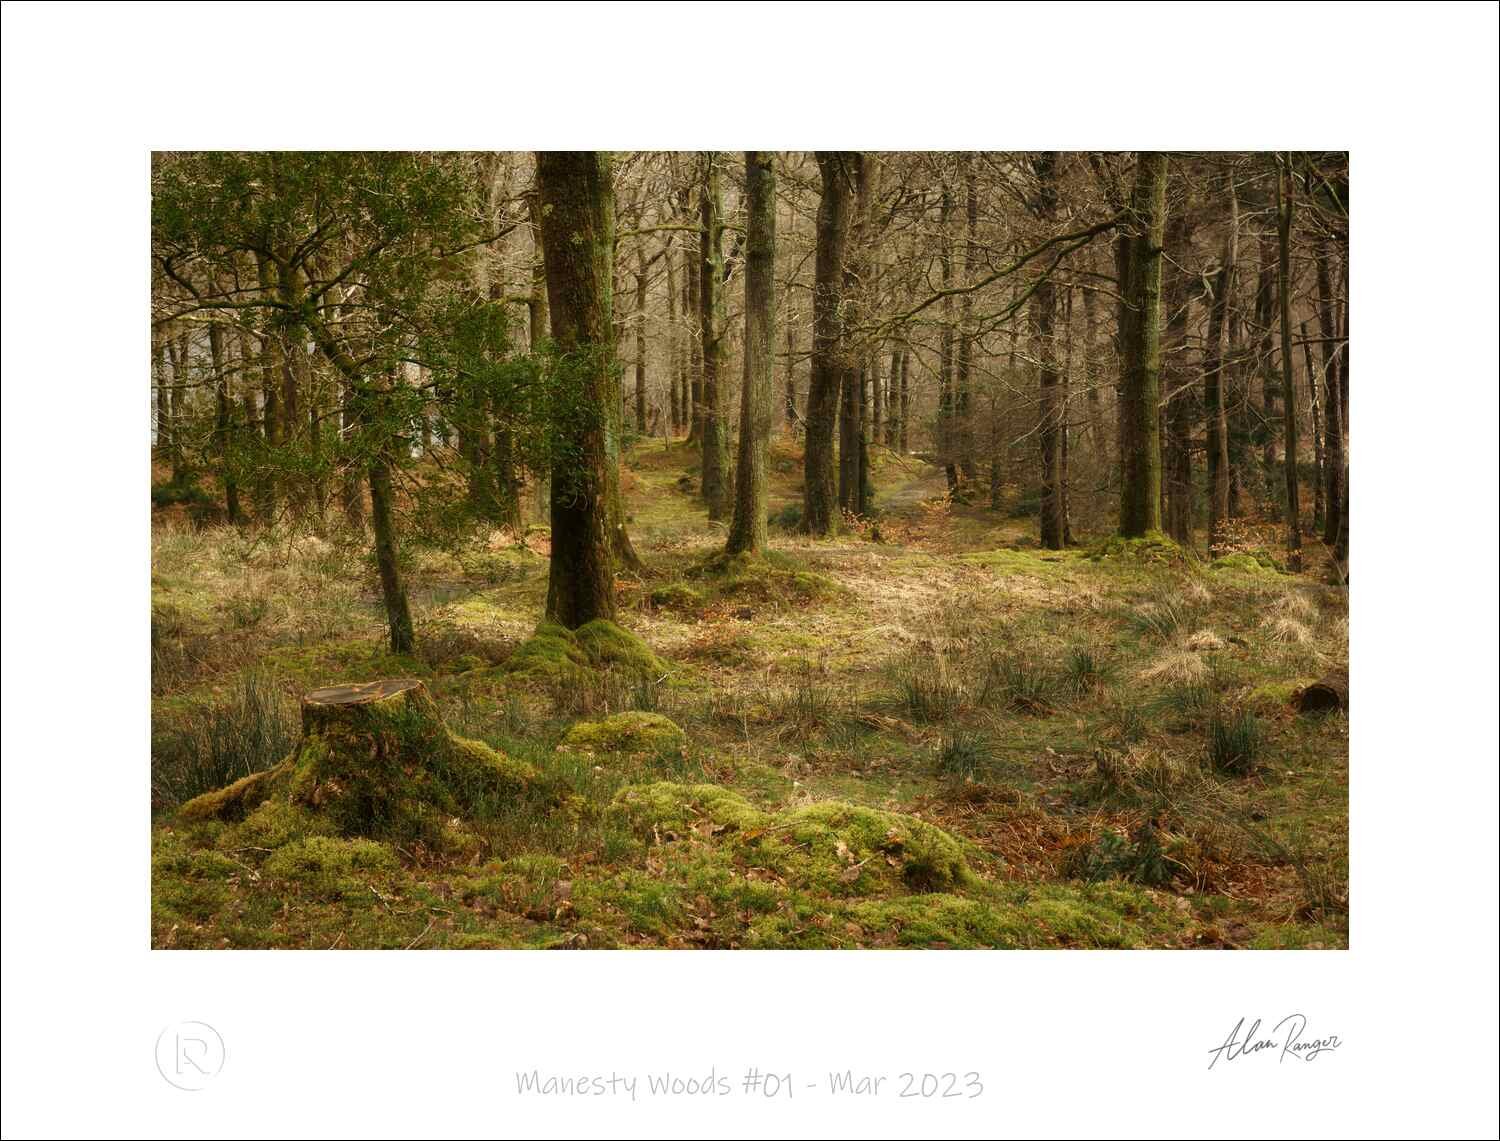 Manesty Woods #01 - Mar 2023.jpg